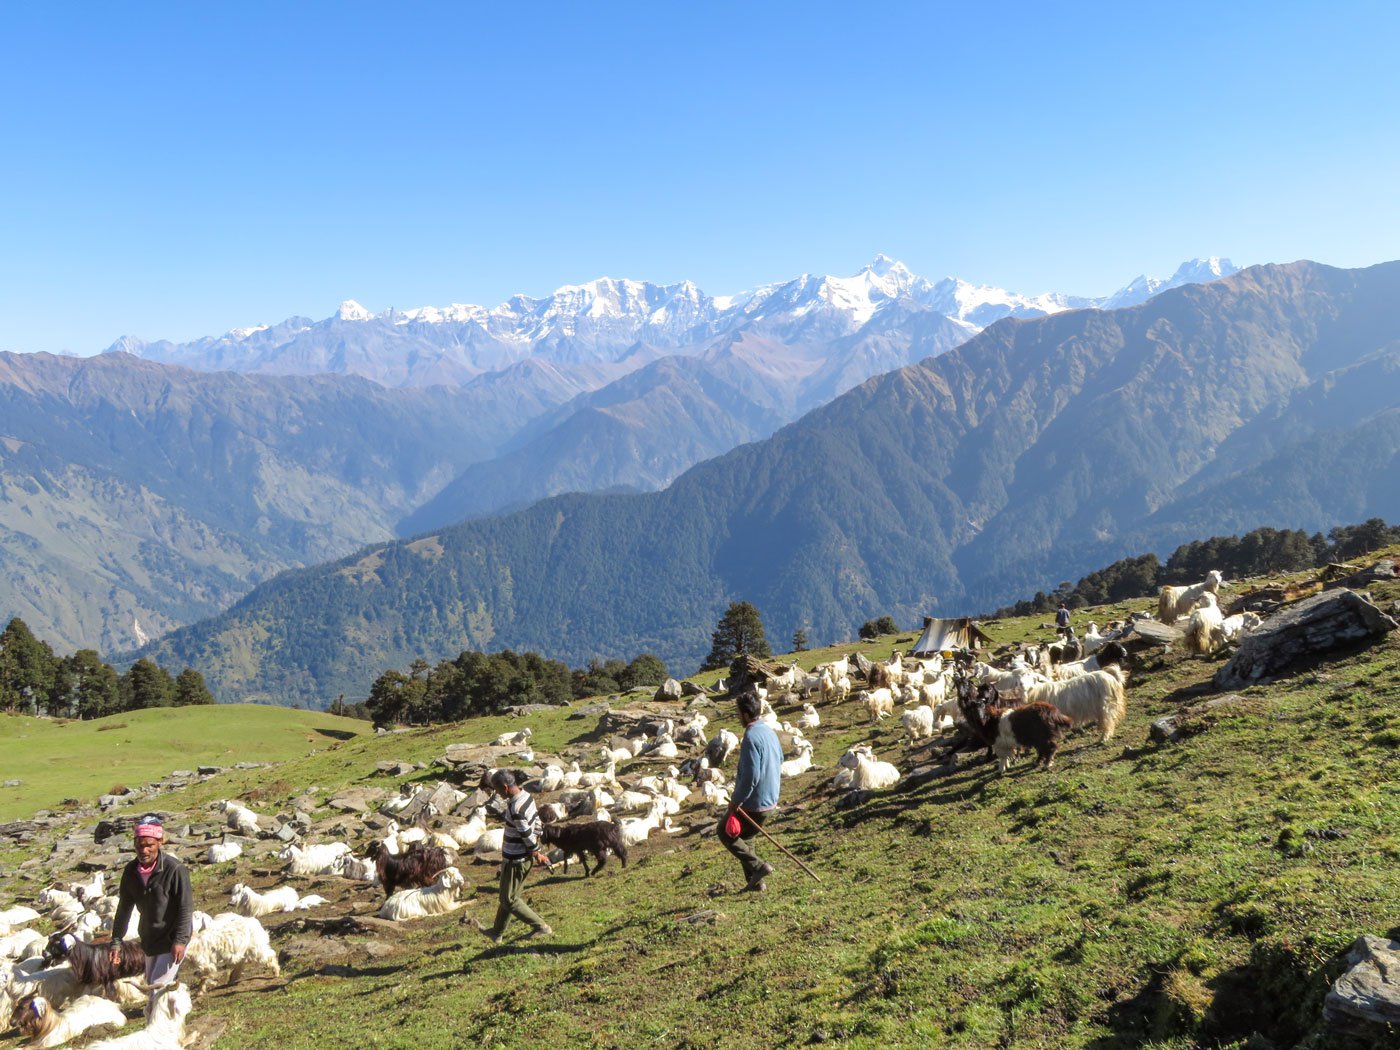 Guru Lal, Gaur Singh Thakur, Vikas Dhondiyal and their grazing sheep on the mountain, with snowy Himalayan peaks in the far distance